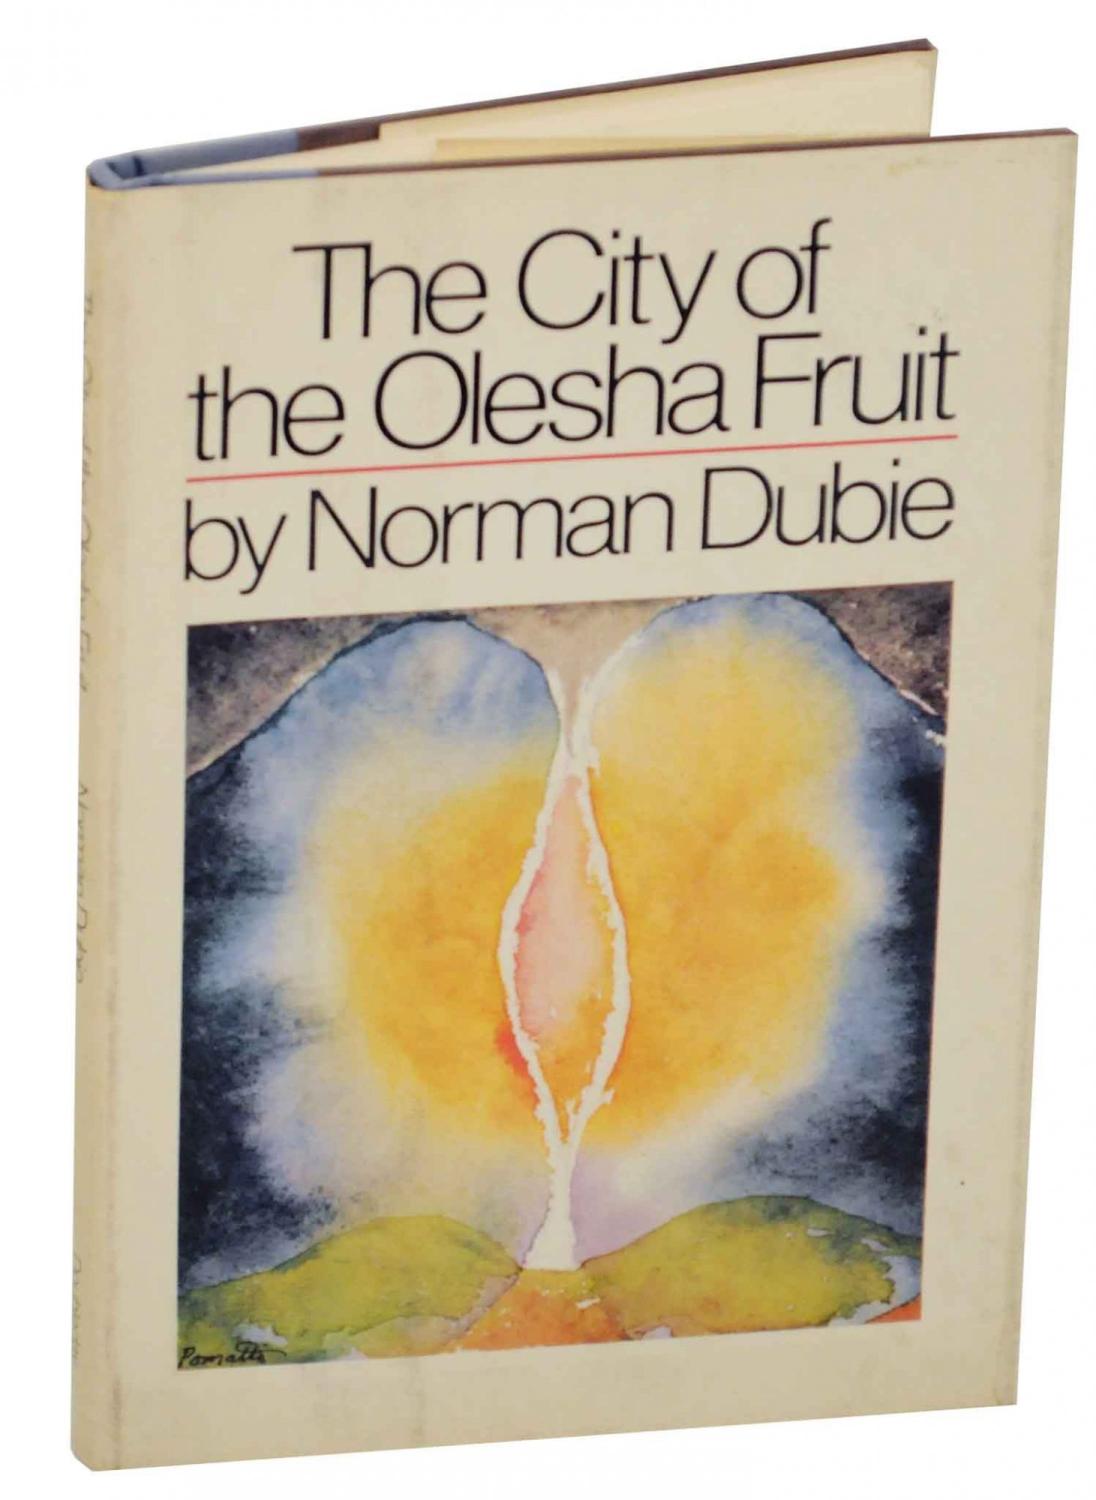 The City of the Olesha Fruit - DUBIE, Norman